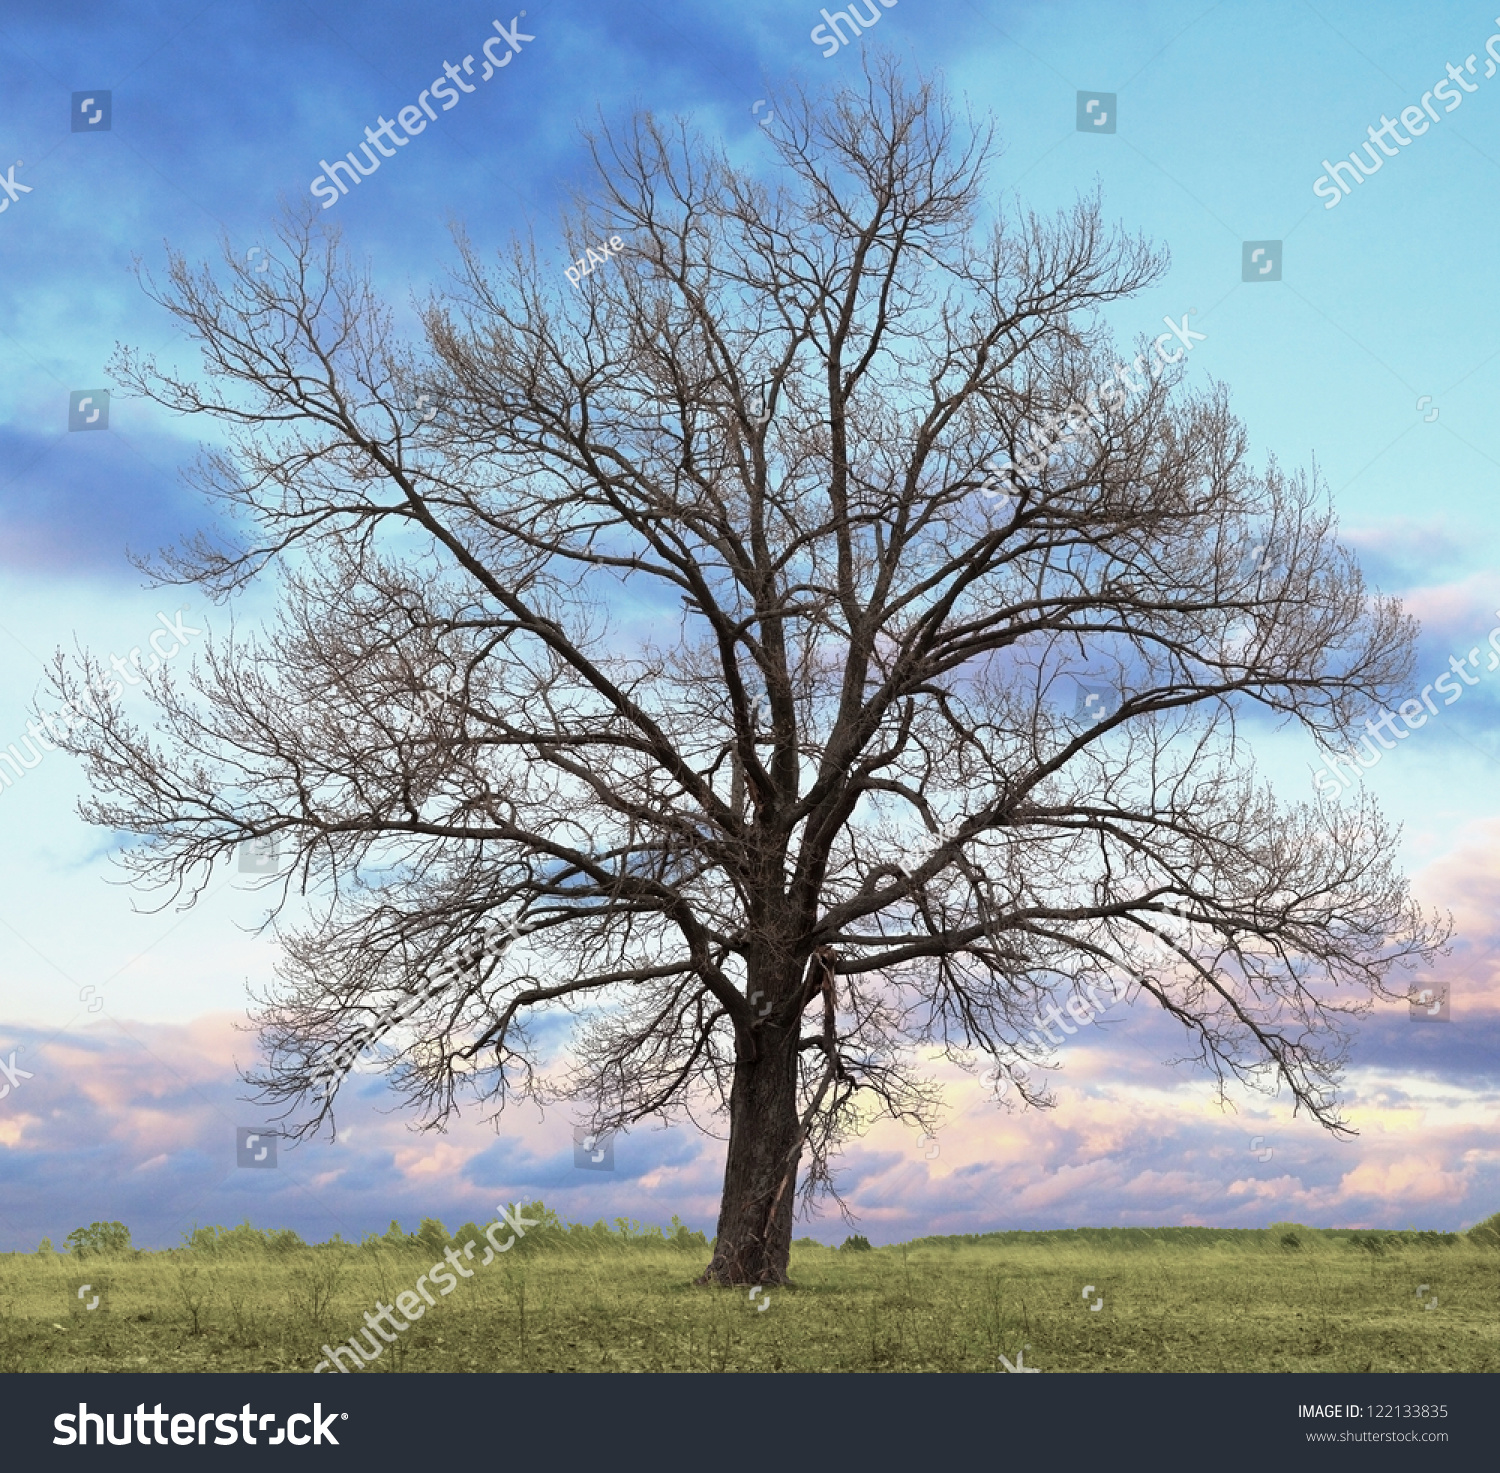 oak-tree-without-leaves-stock-photo-122133835-shutterstock